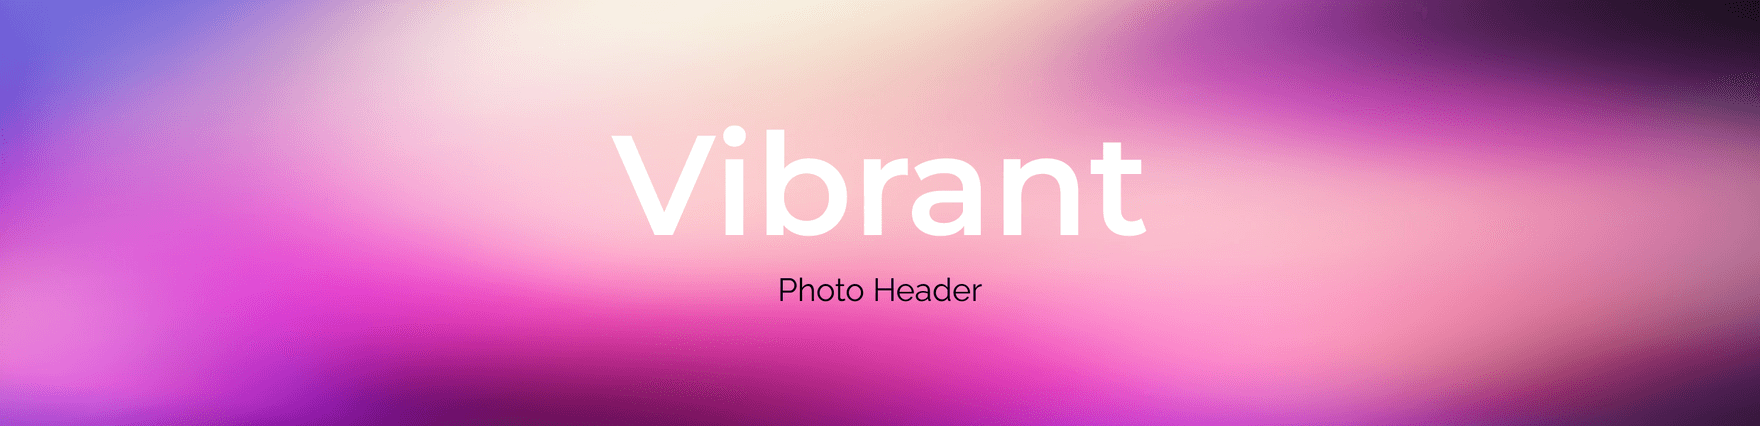 Vibrant Photo Header